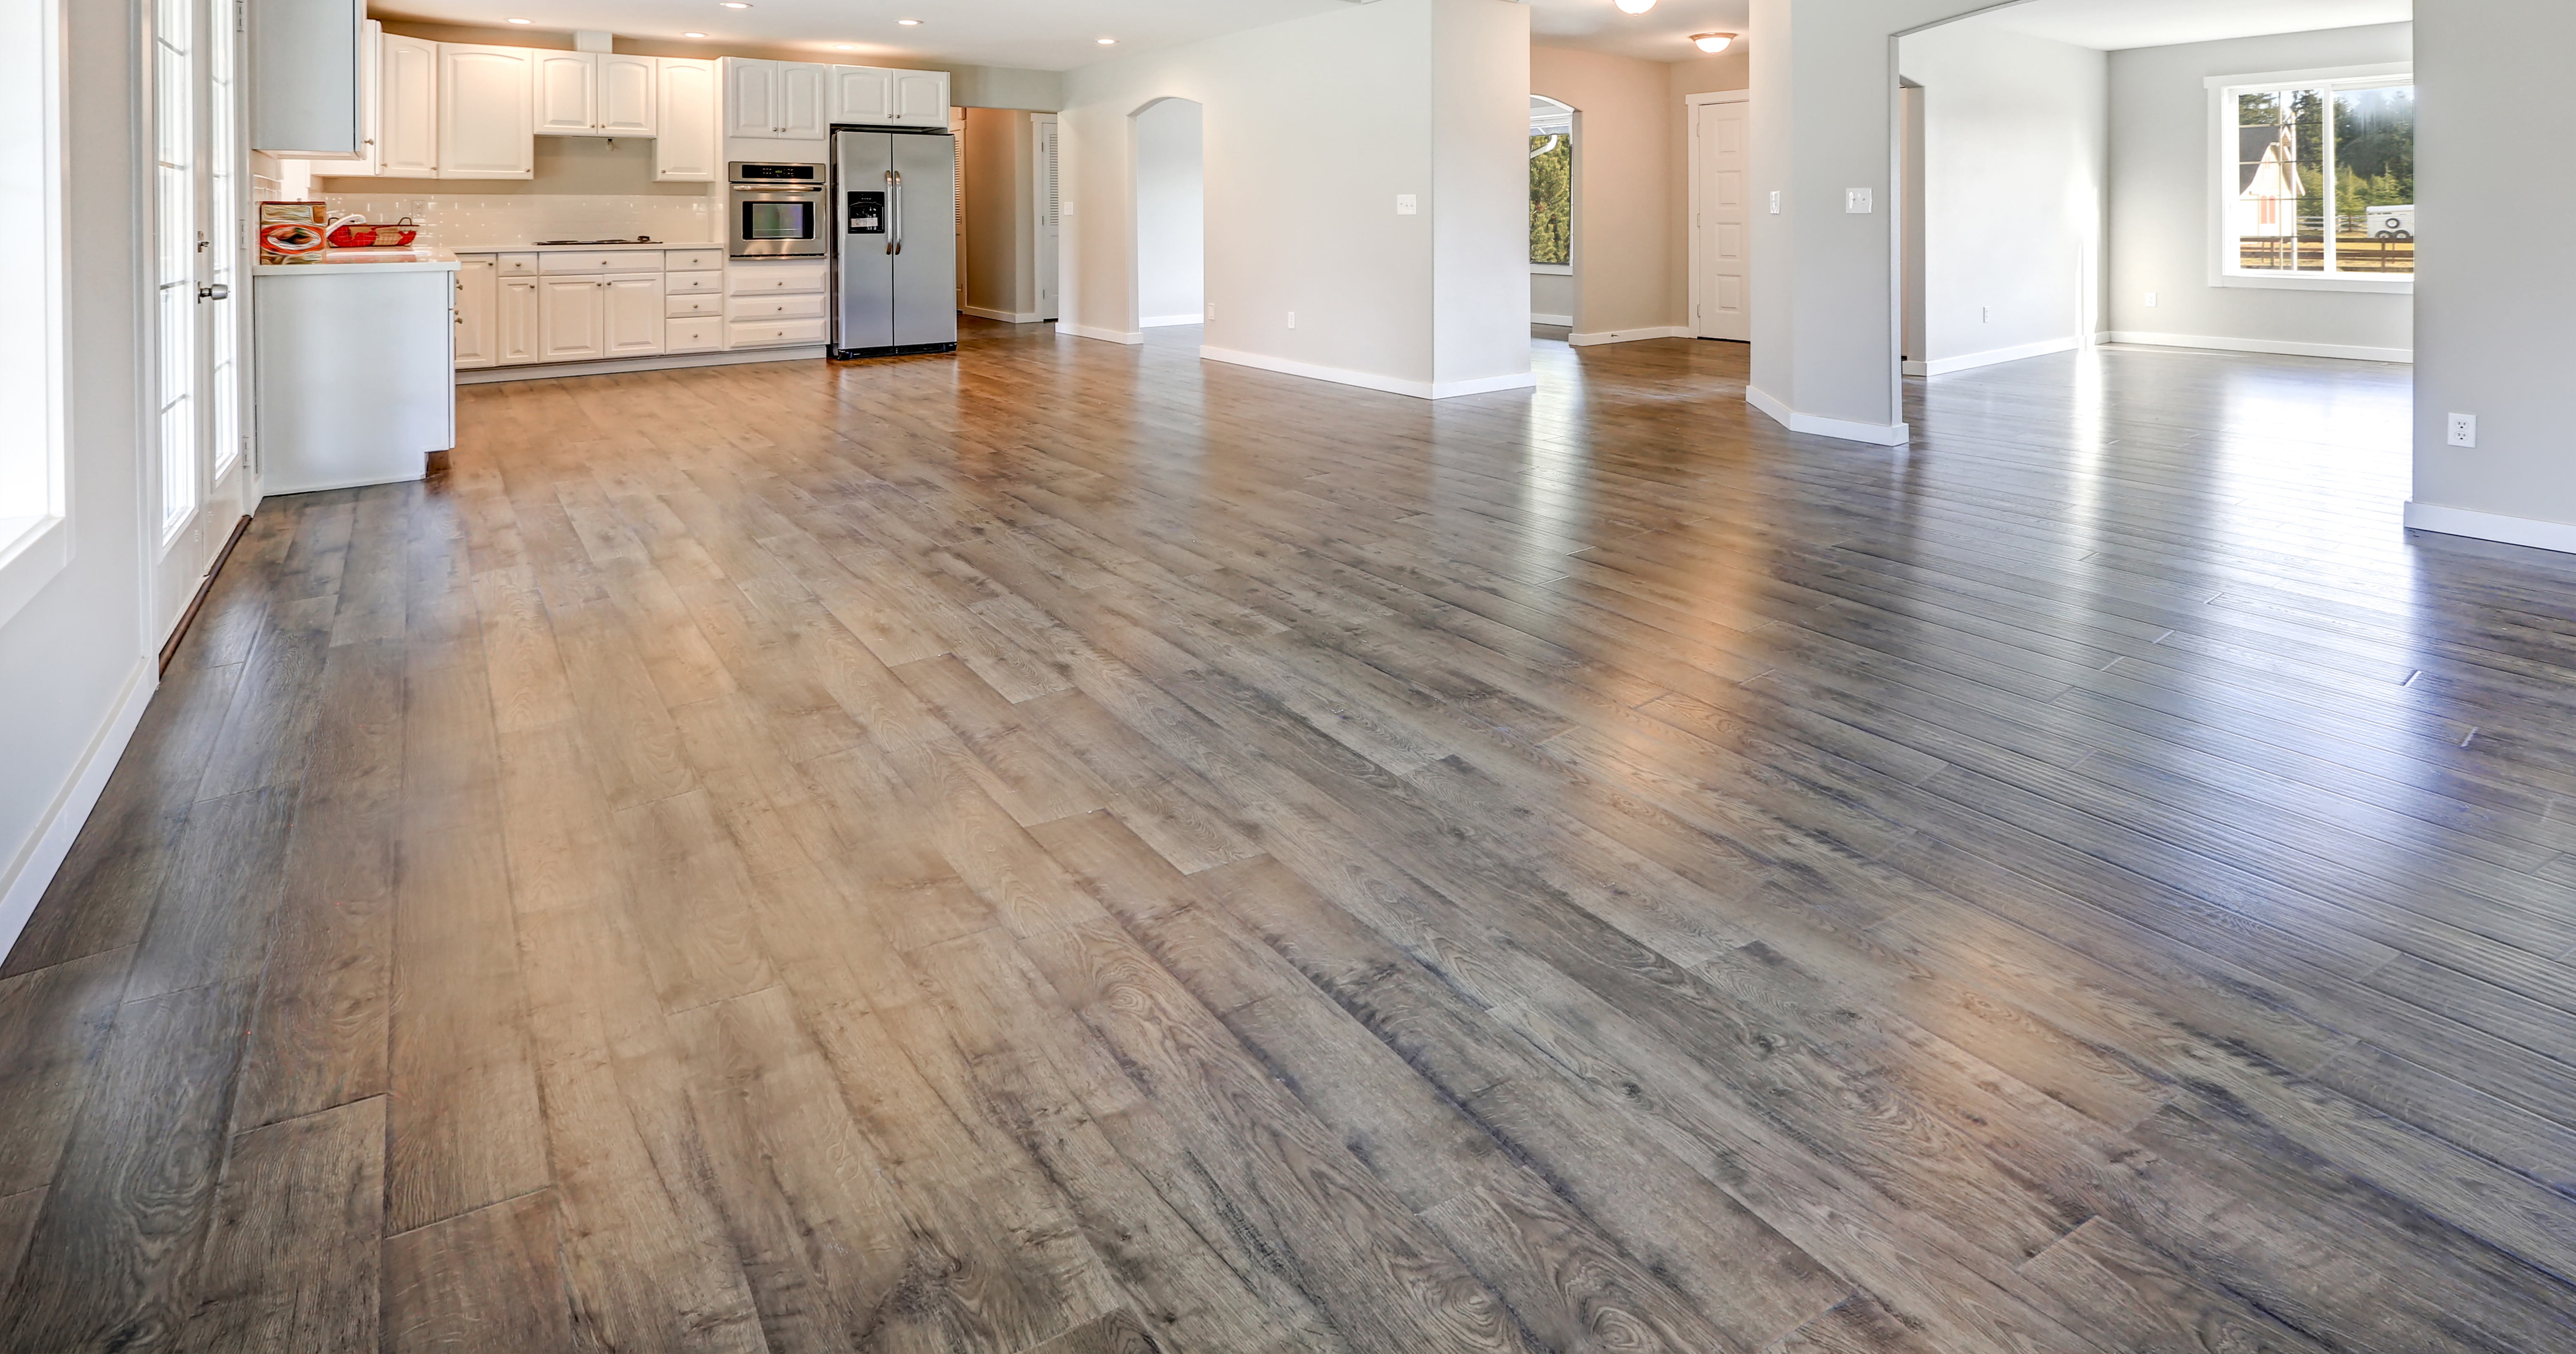 Laminate Flooring Pros And Cons Bona Us, Is Bona Good For Laminate Floors